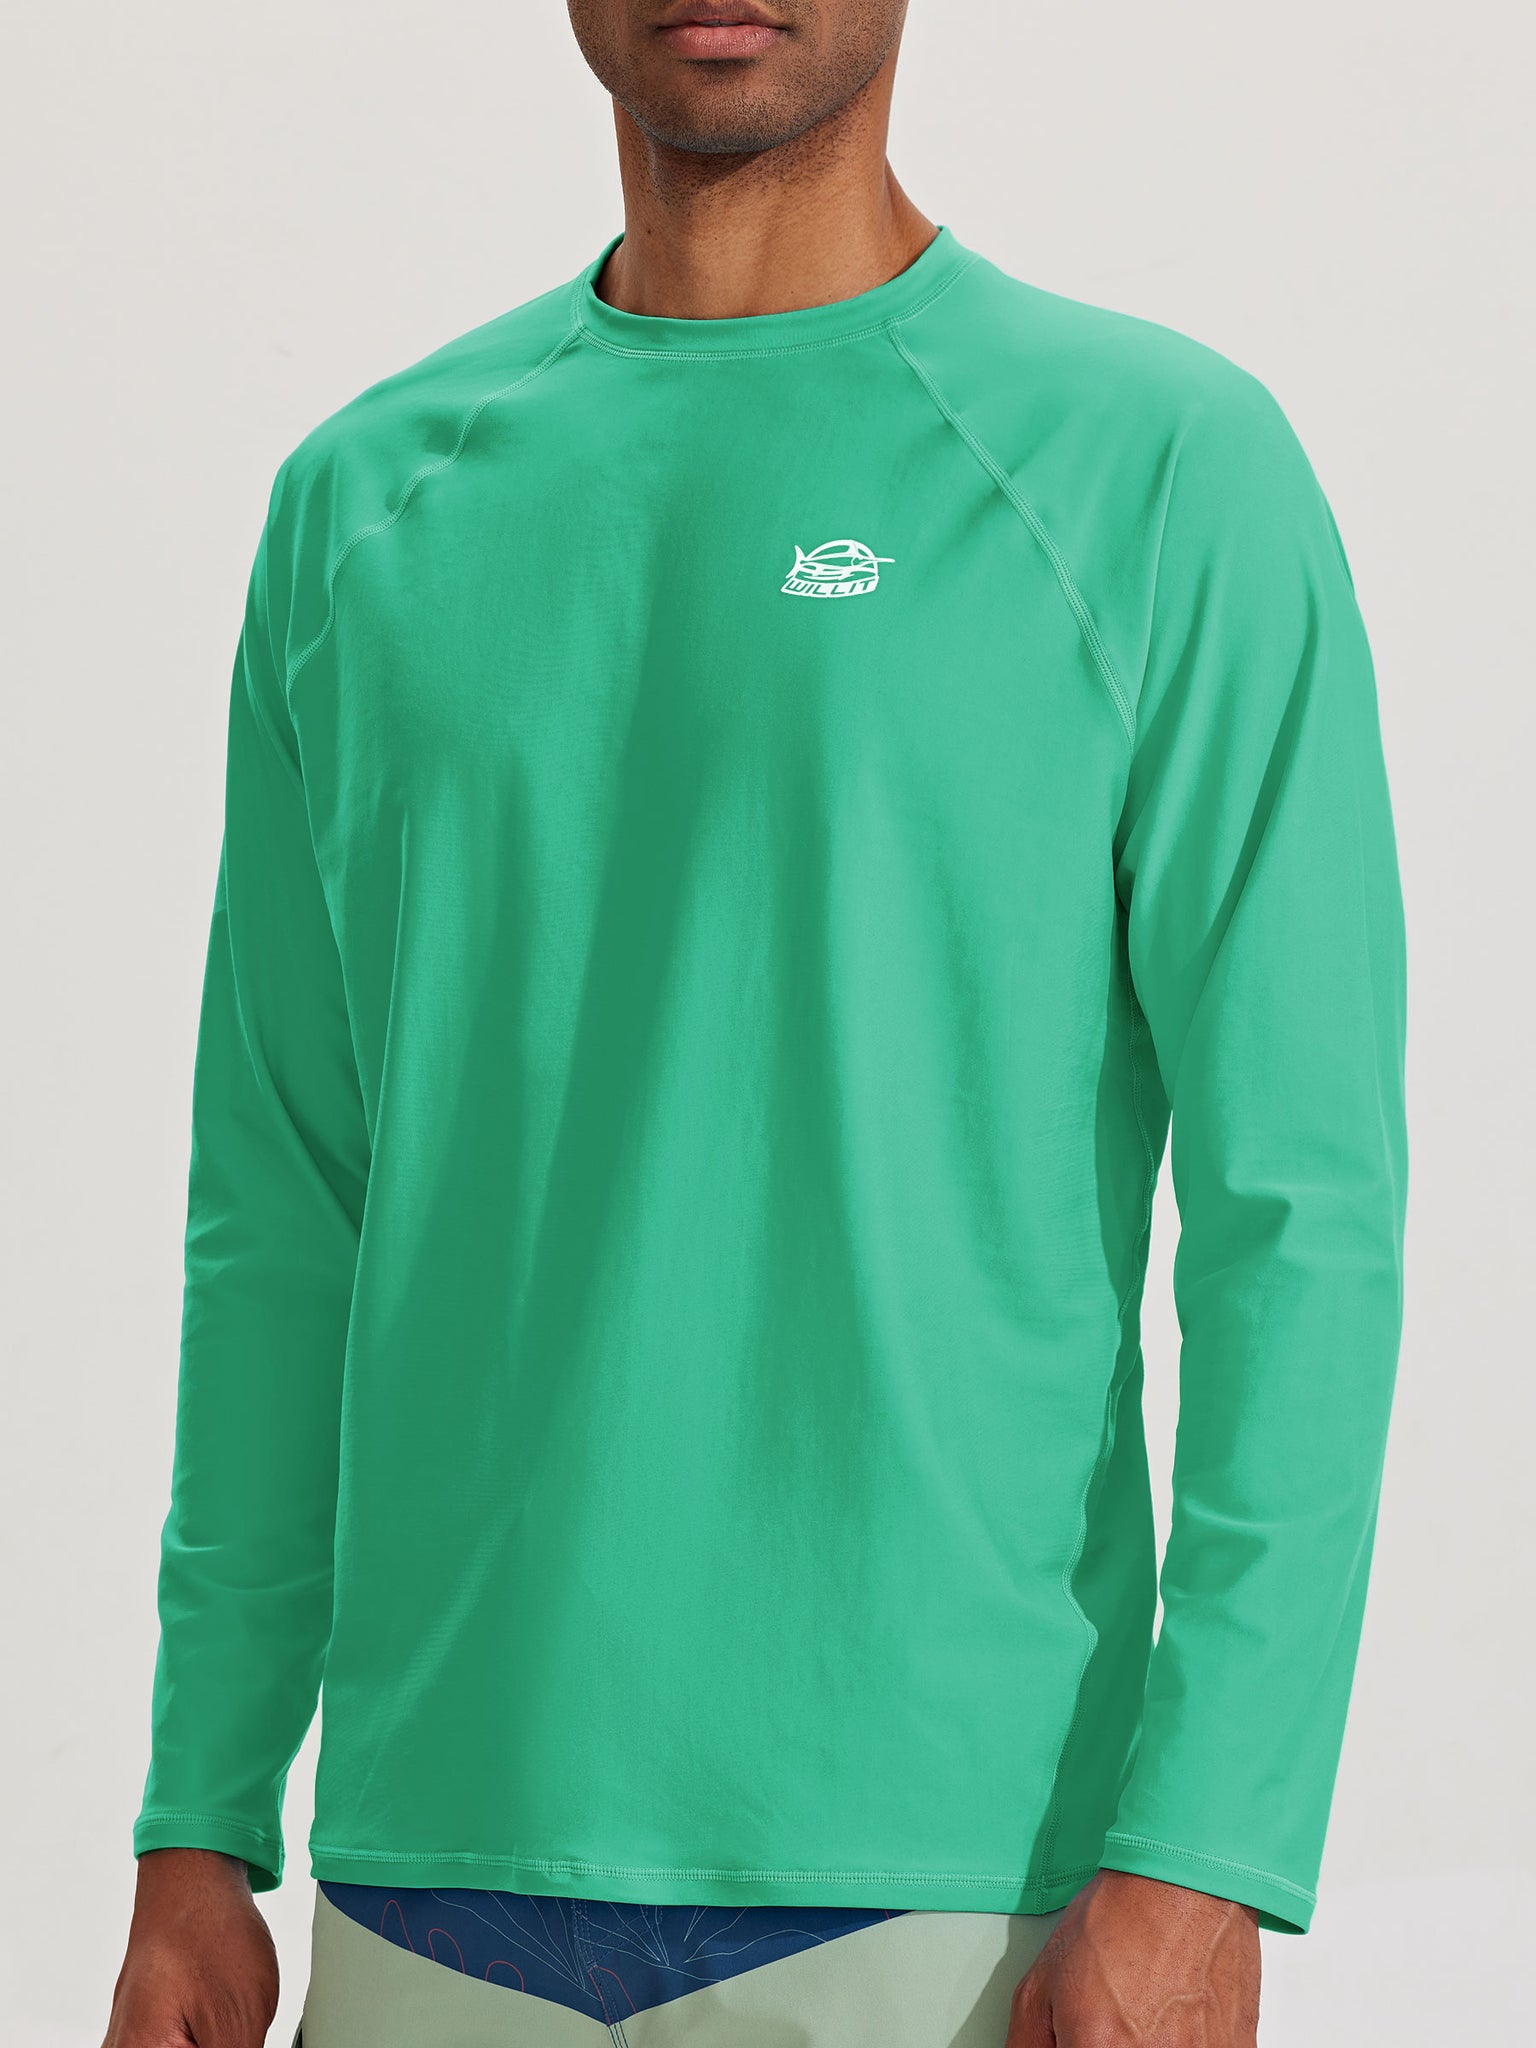 Men's Sun Protection Long Sleeve Shirt_Green_model1